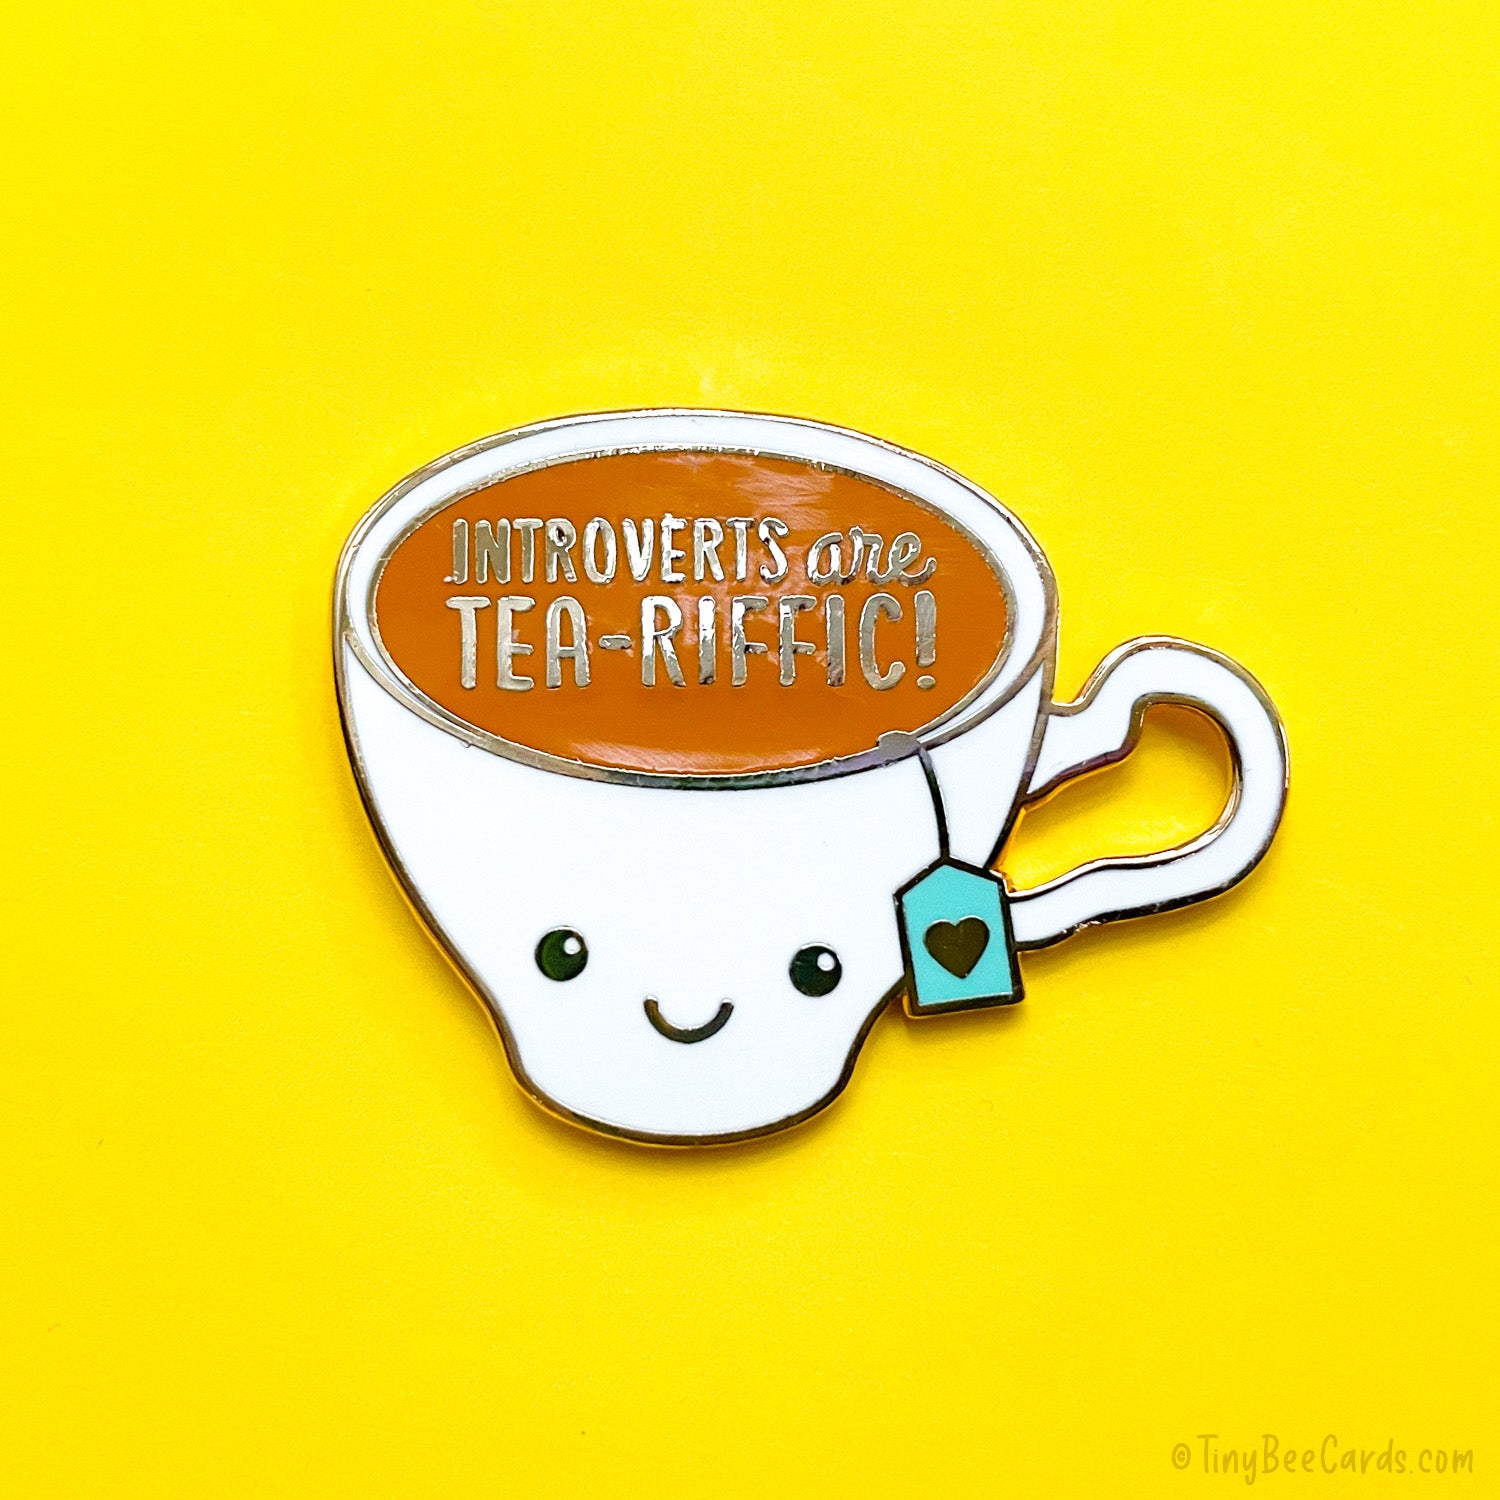 Introvert Enamel Pin "Introverts are Tea-Riffic"